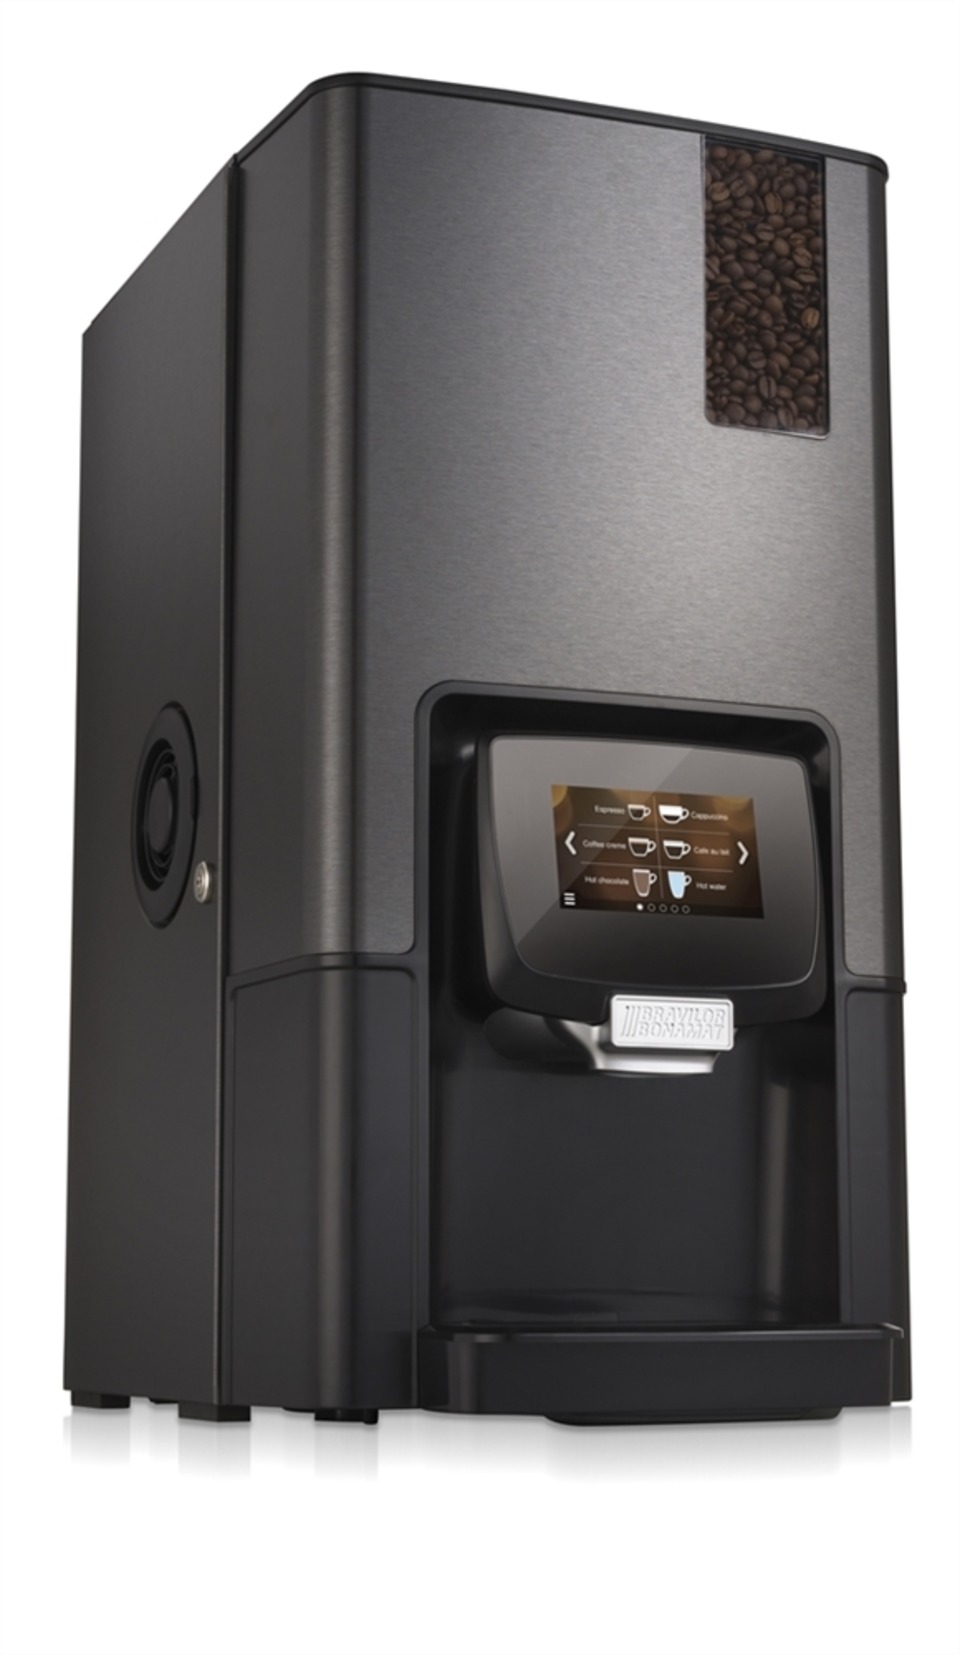 Bravilor Bonamat Launches The Sego Compact Espresso Machine